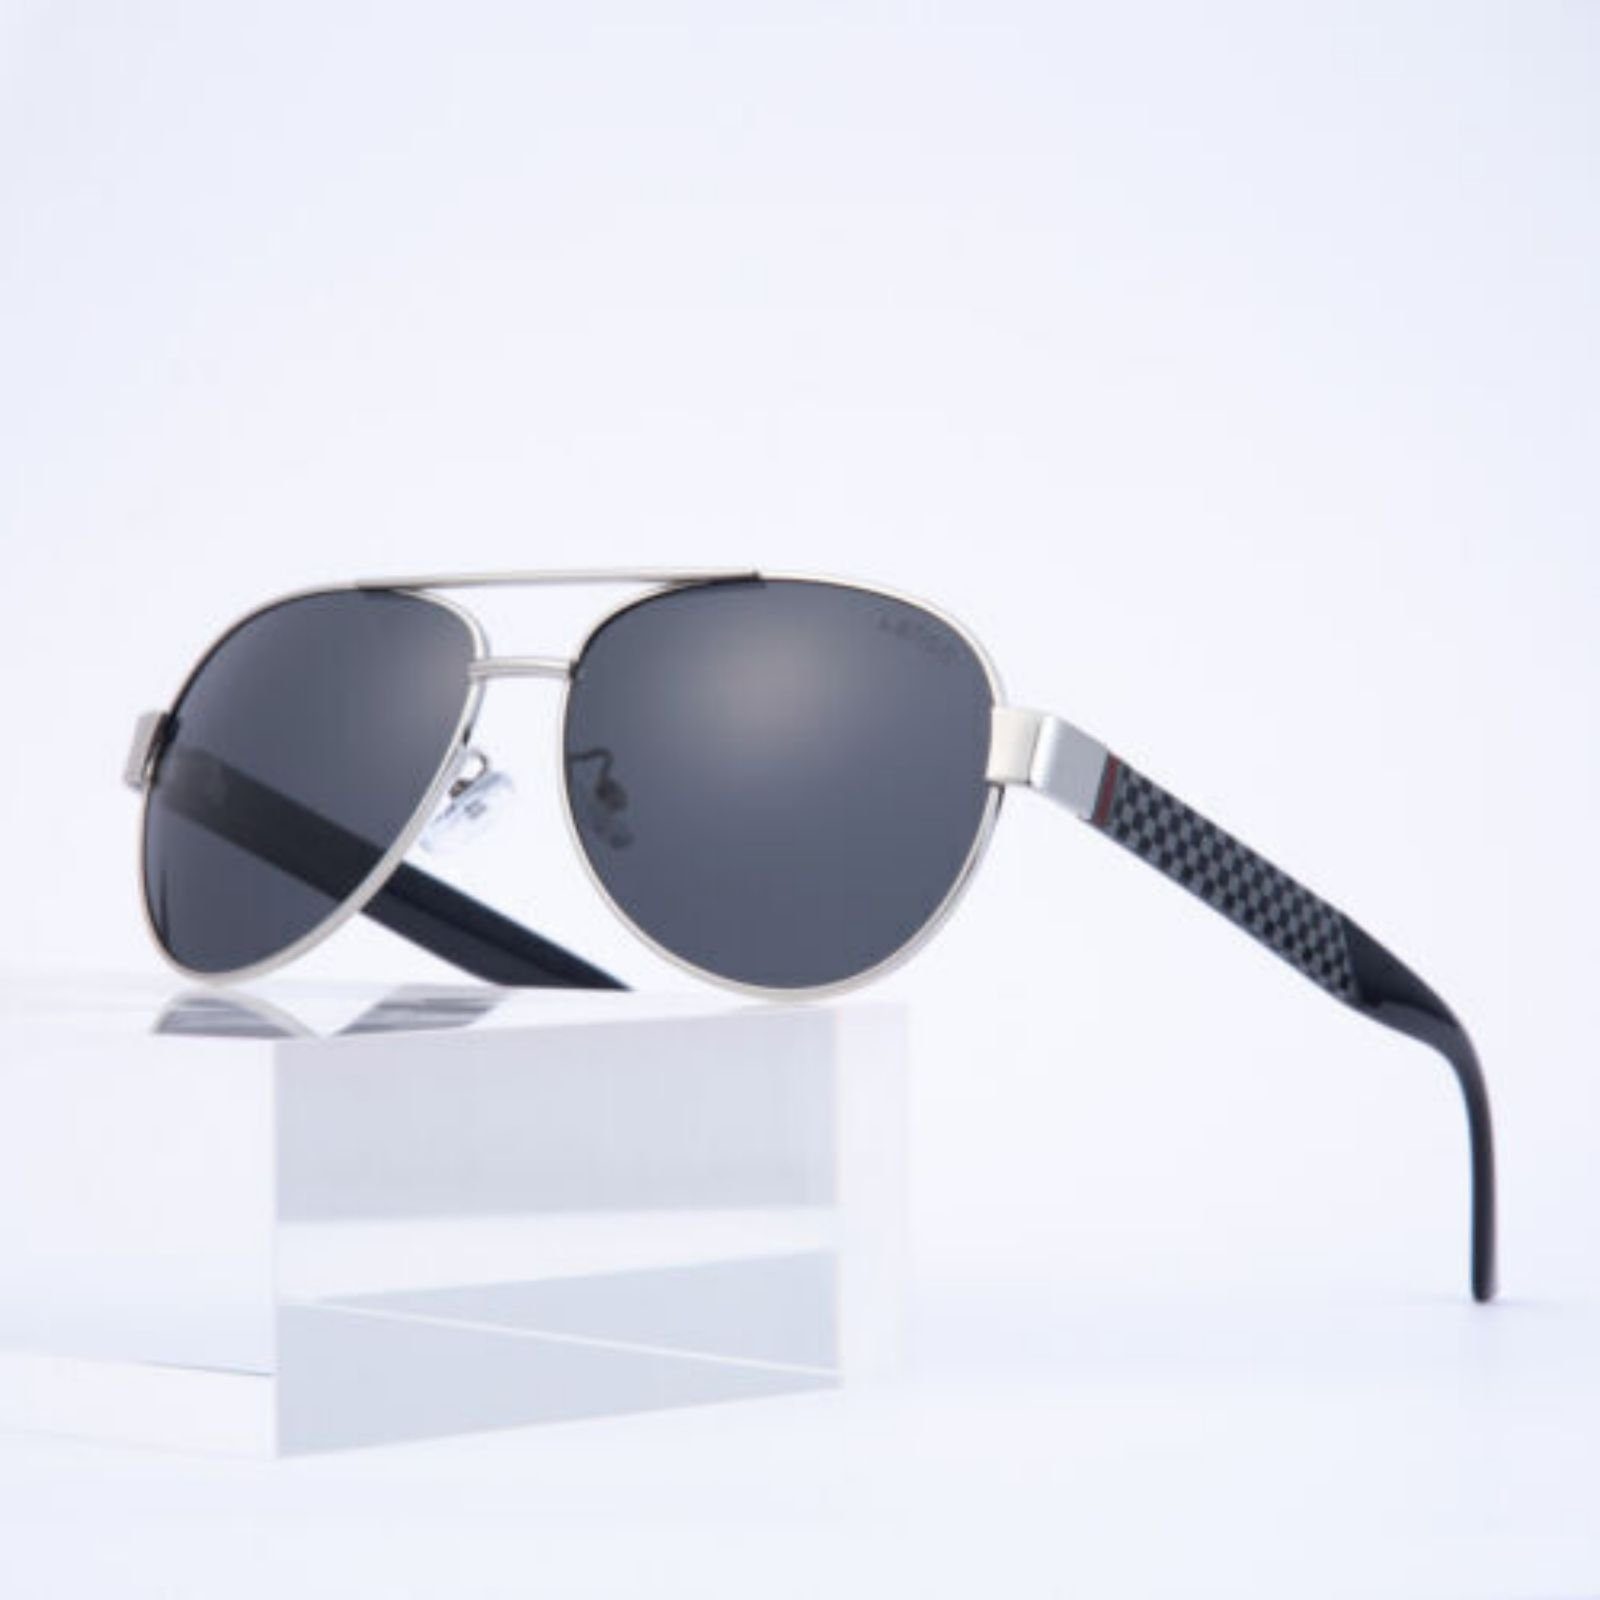 Lamon Sonnenbrille Herren Aluminium Magnesium Polarisiert Sonnenbrille Sportarten UV400 Silberner Rahmen, graue Linse | Sonnenbrillen